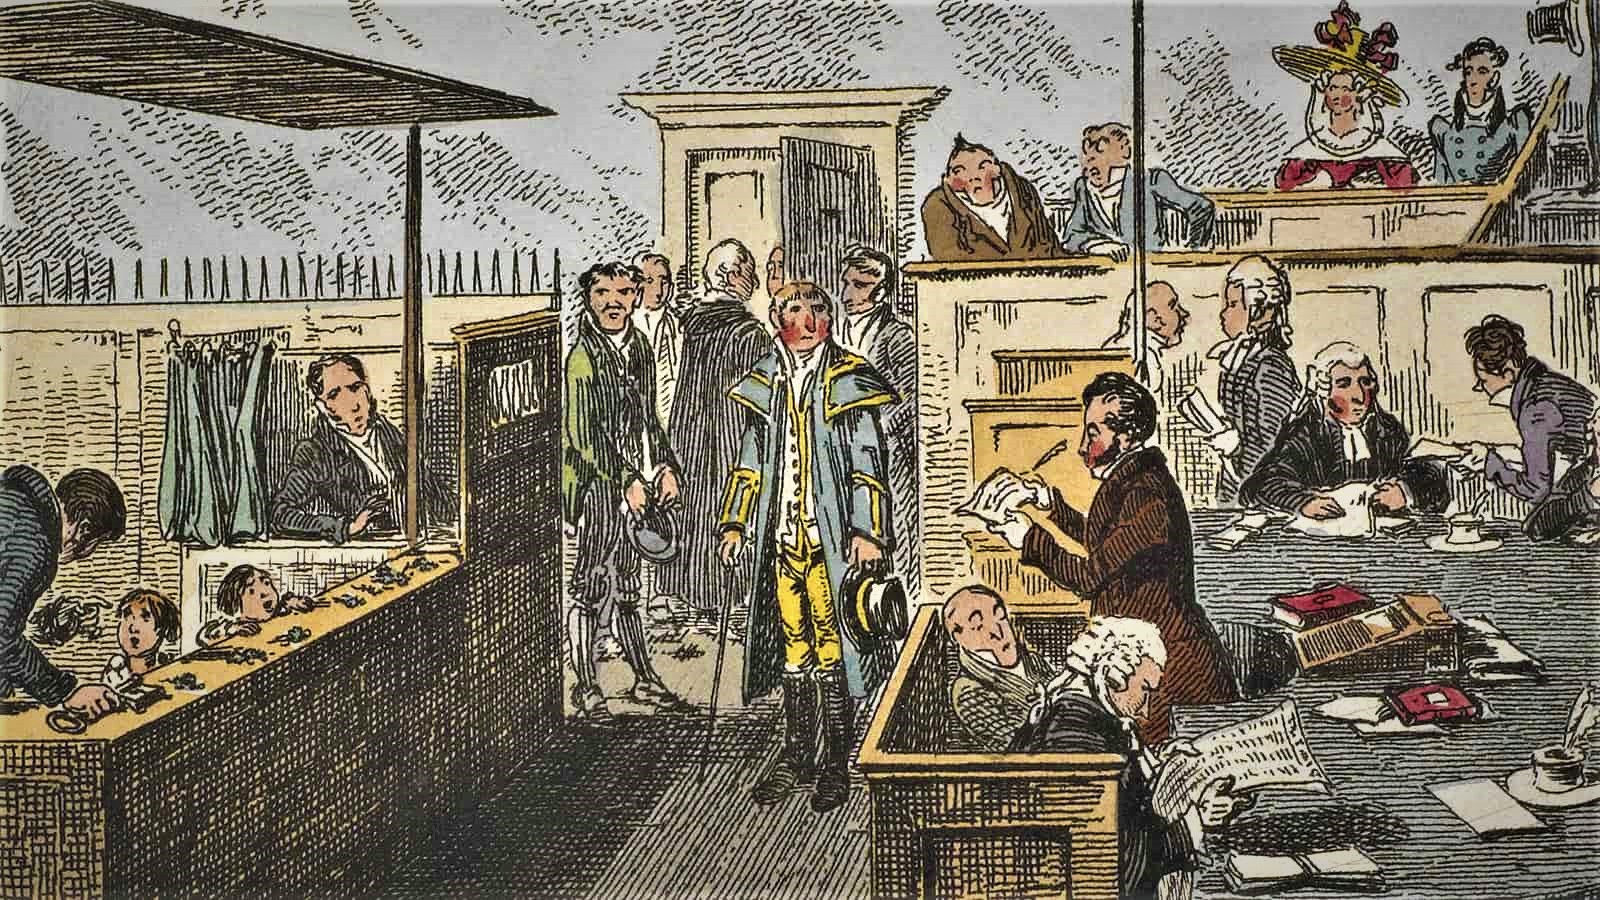 Crimes in society. Англия 18 век. Лондон газетчики 19 век. Долгий 19 век. Суд викторианской Англии.